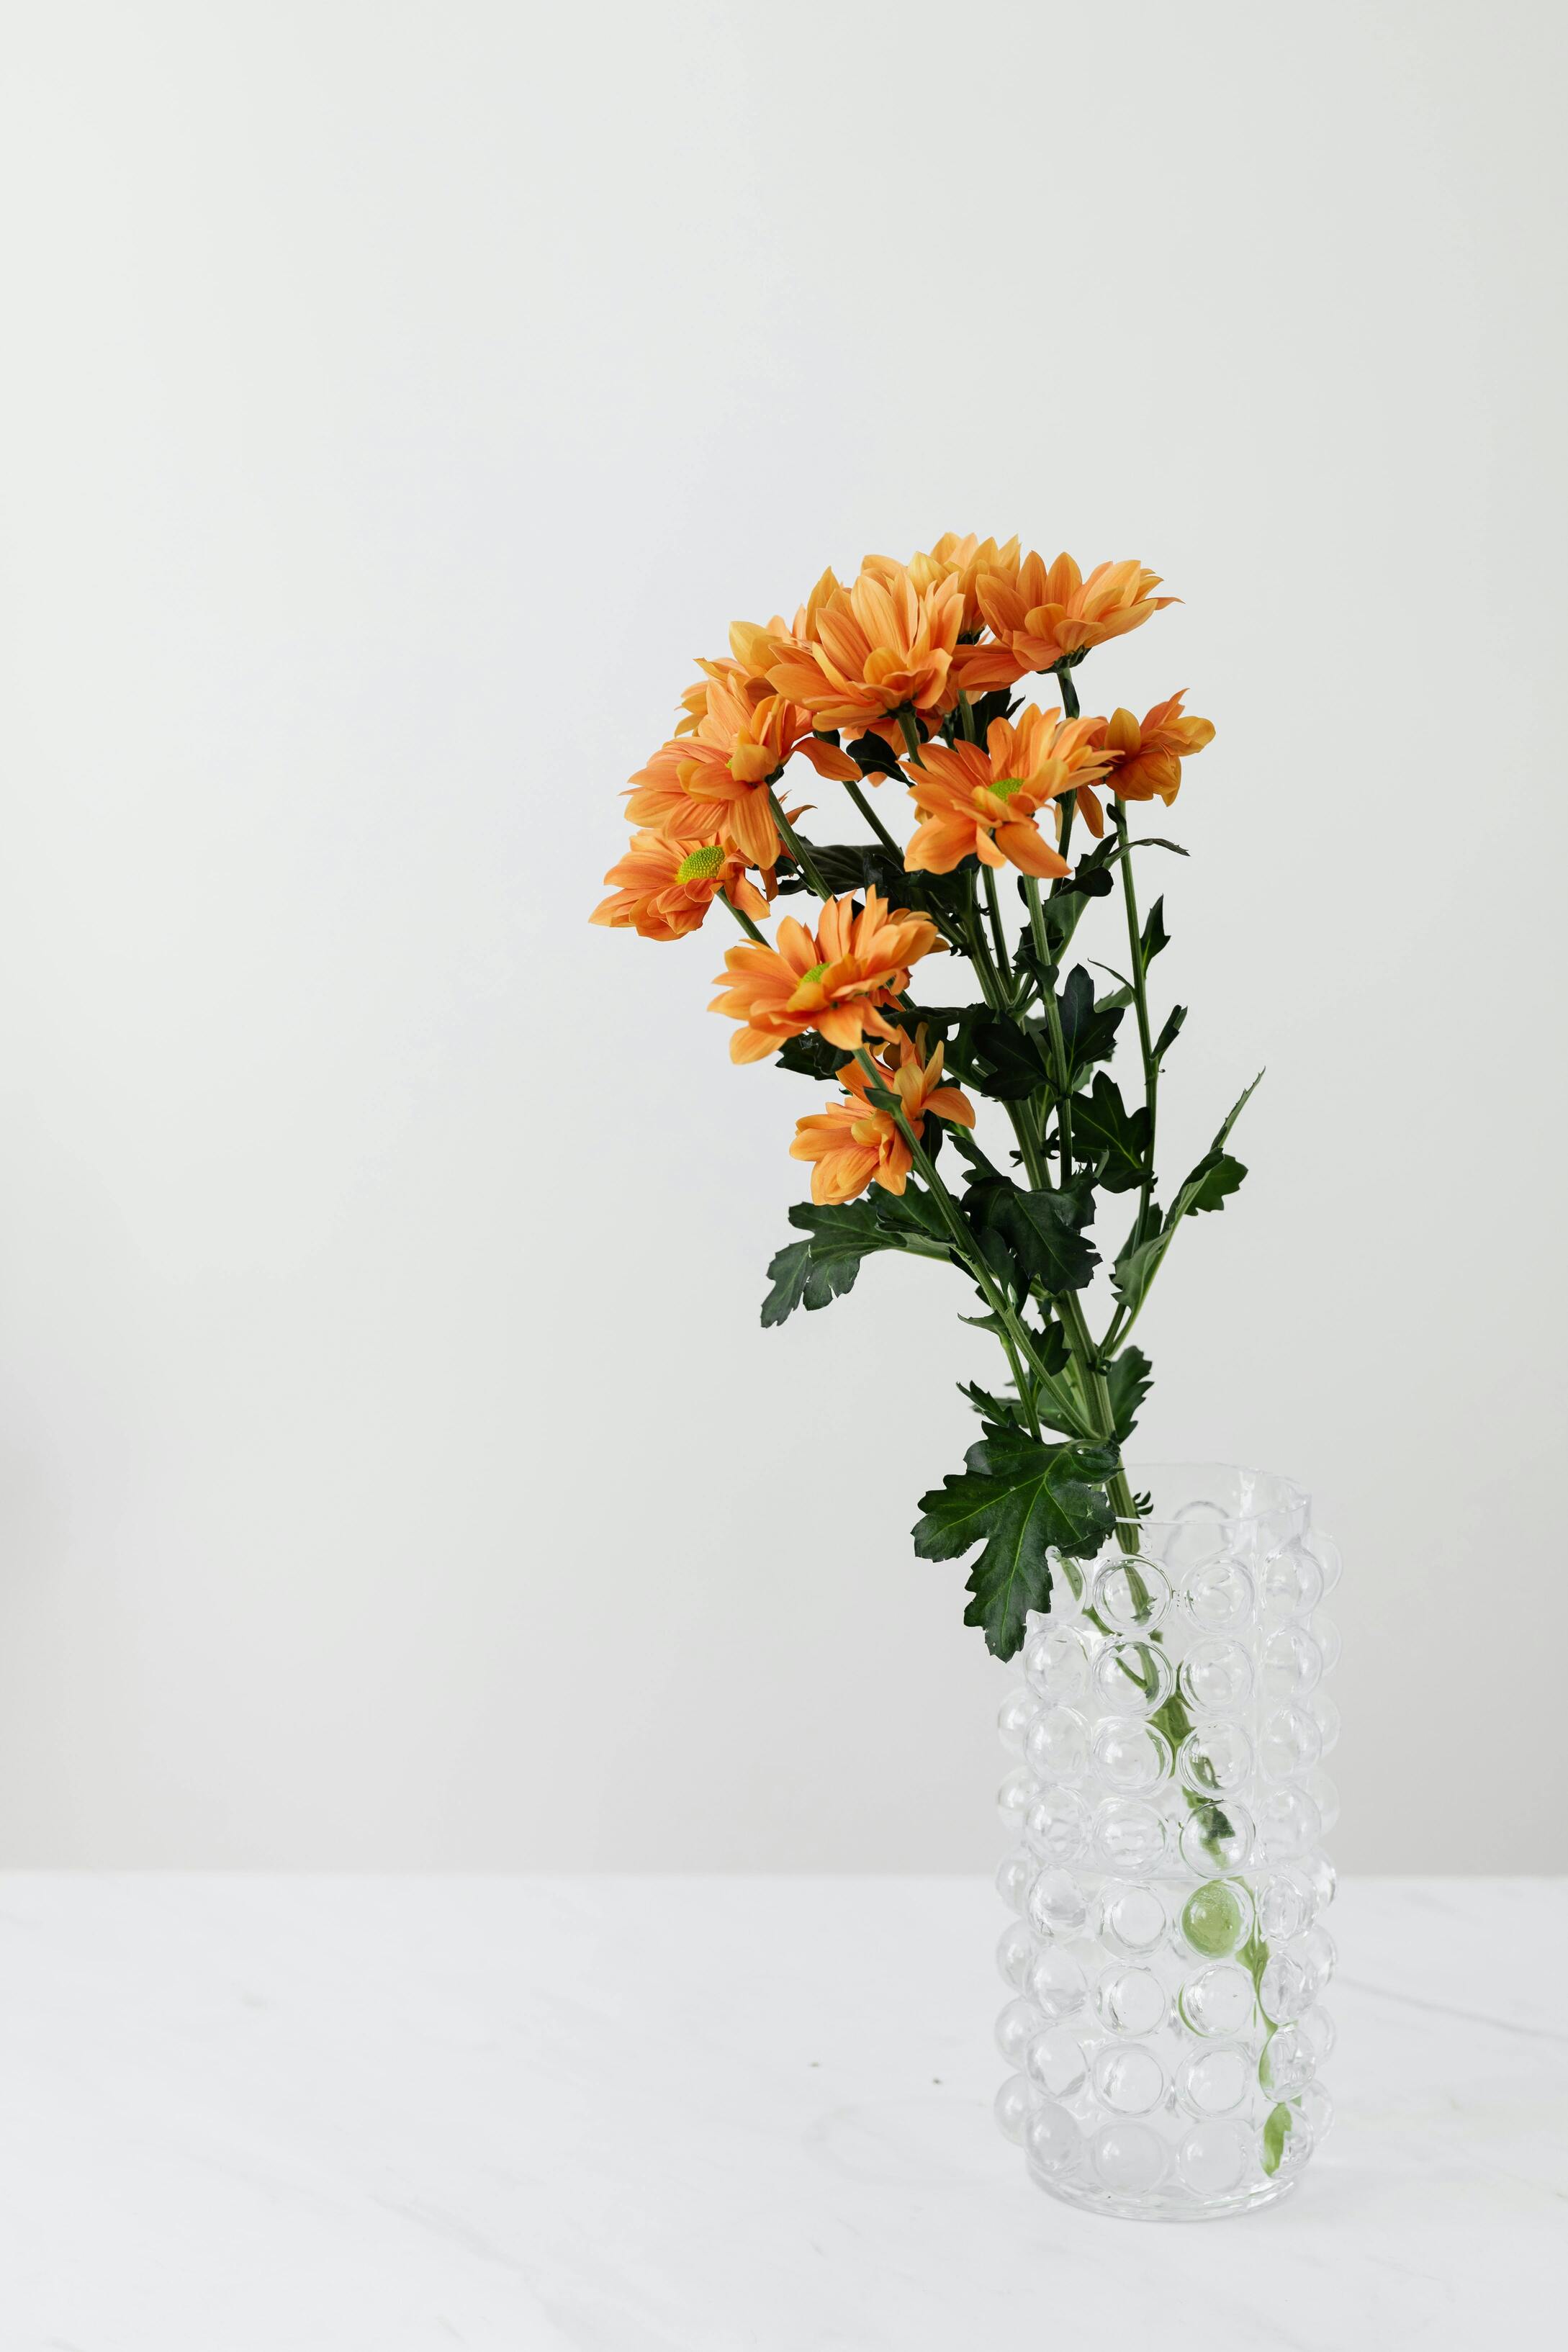 Chrysanthemum Flowers for Gifting